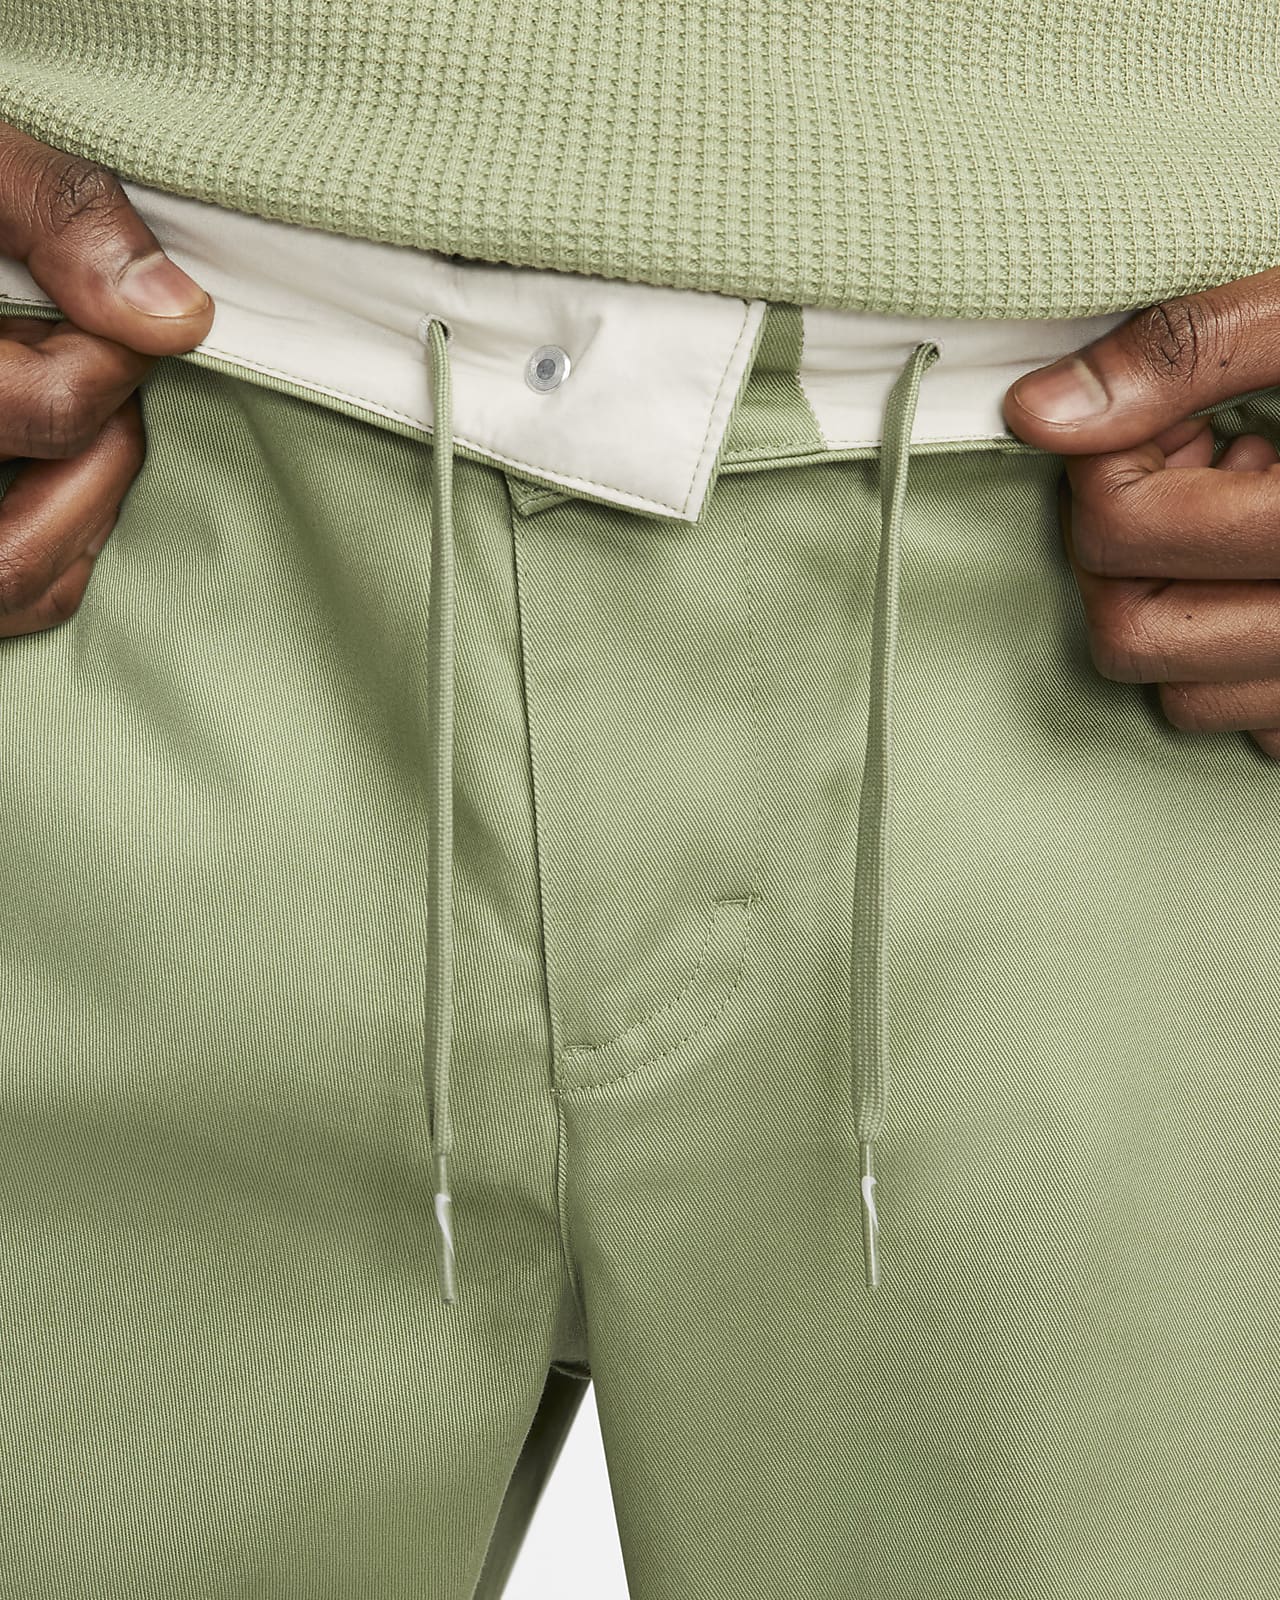 Nike Club Men's Cargo Trousers. Nike LU